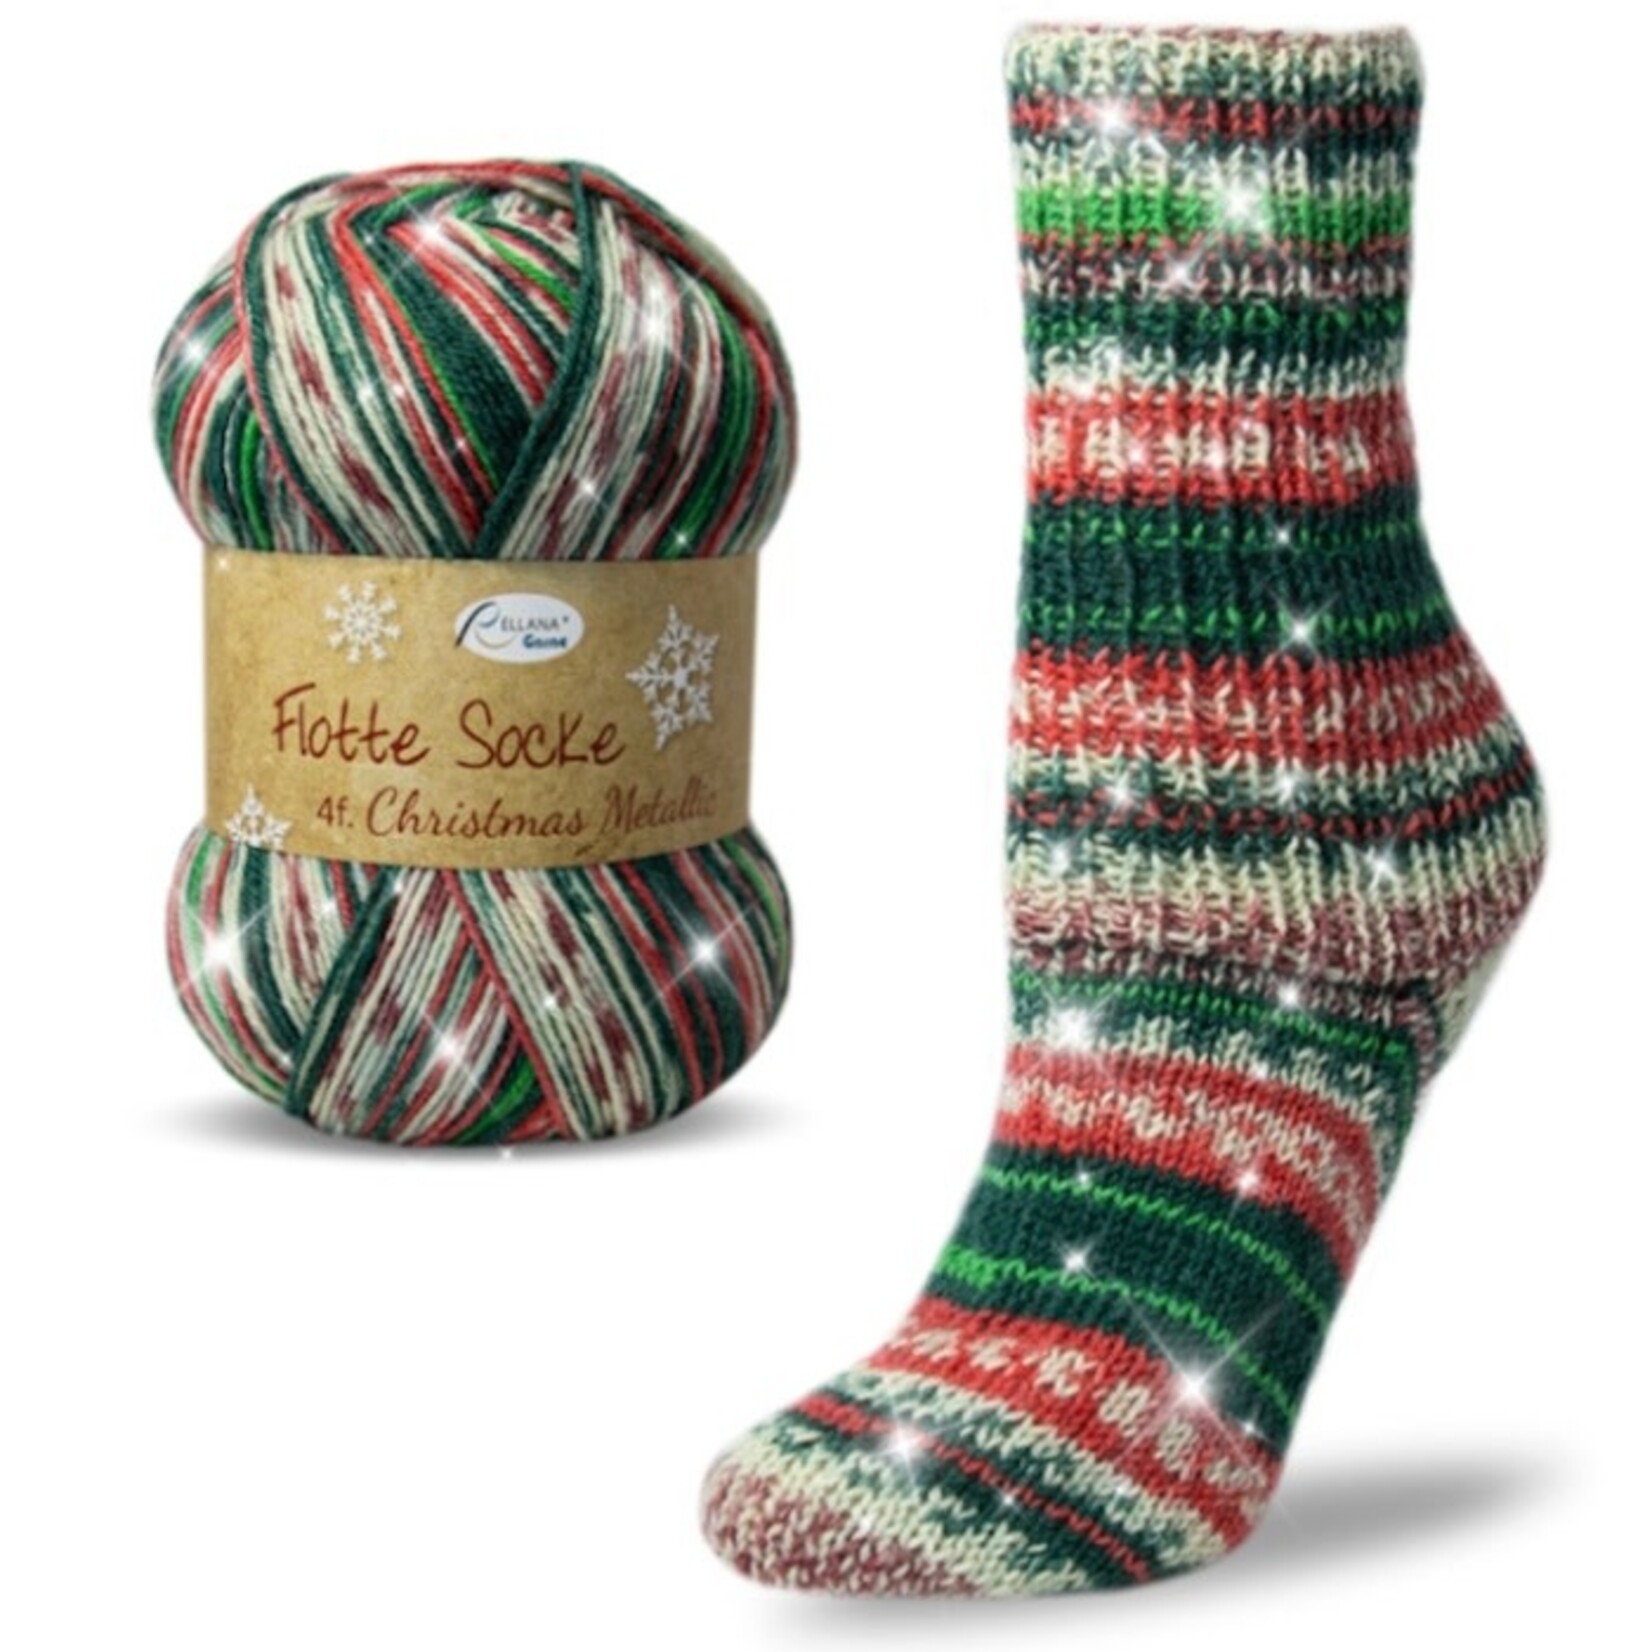 Rellana Flotte Socke Christmas (4 ply) by Rellana Garne